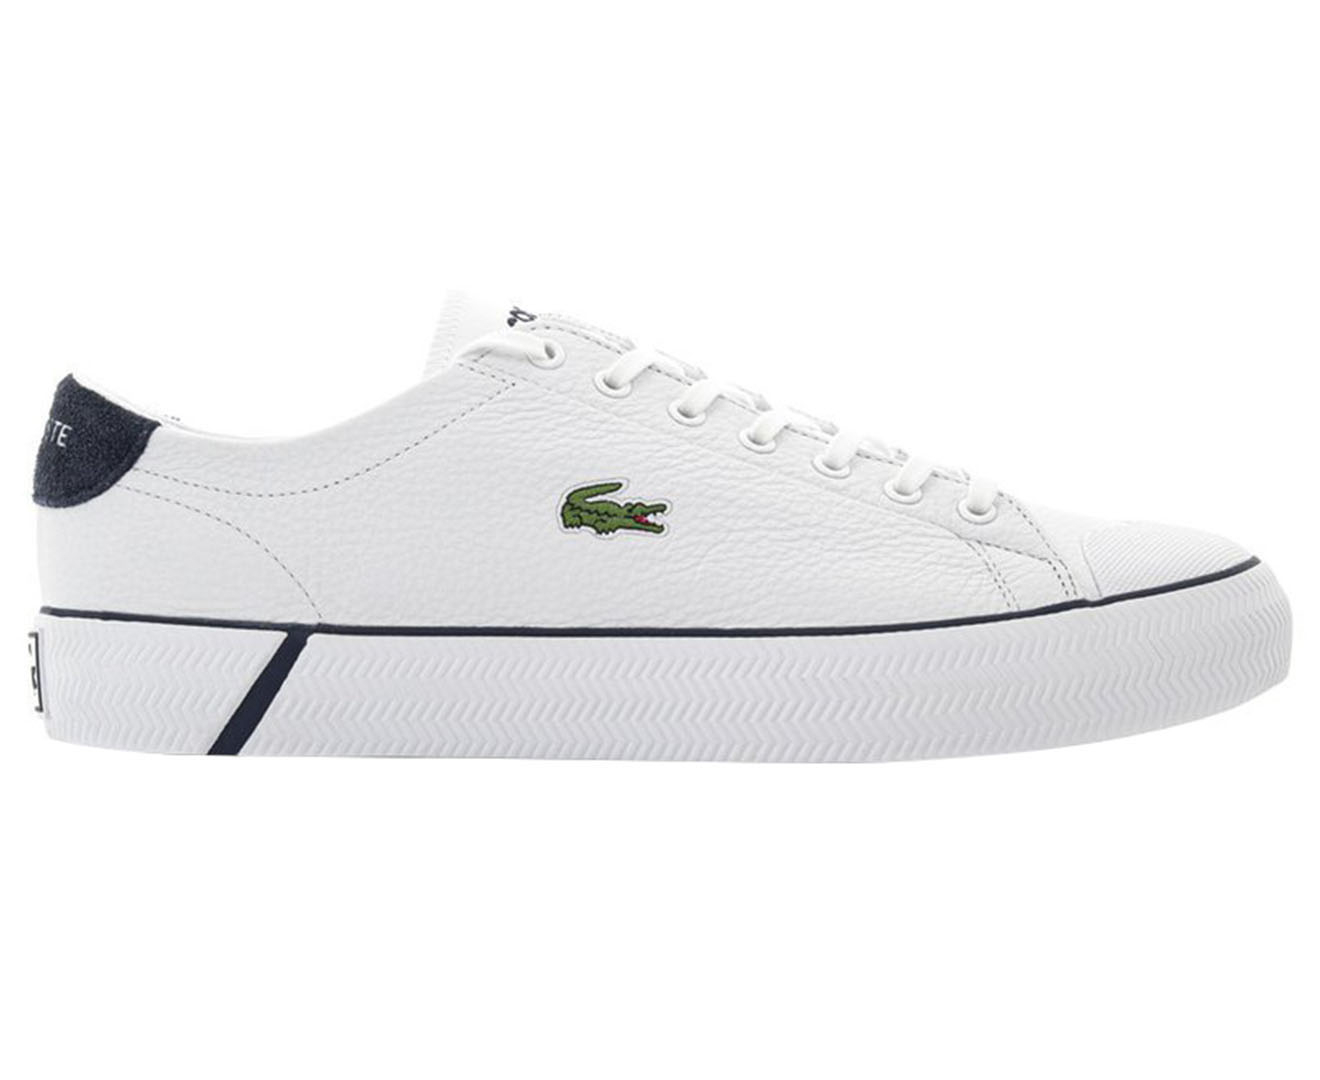 Lacoste Men's Gripshot 120 5 Sneakers - White/Navy | Catch.com.au